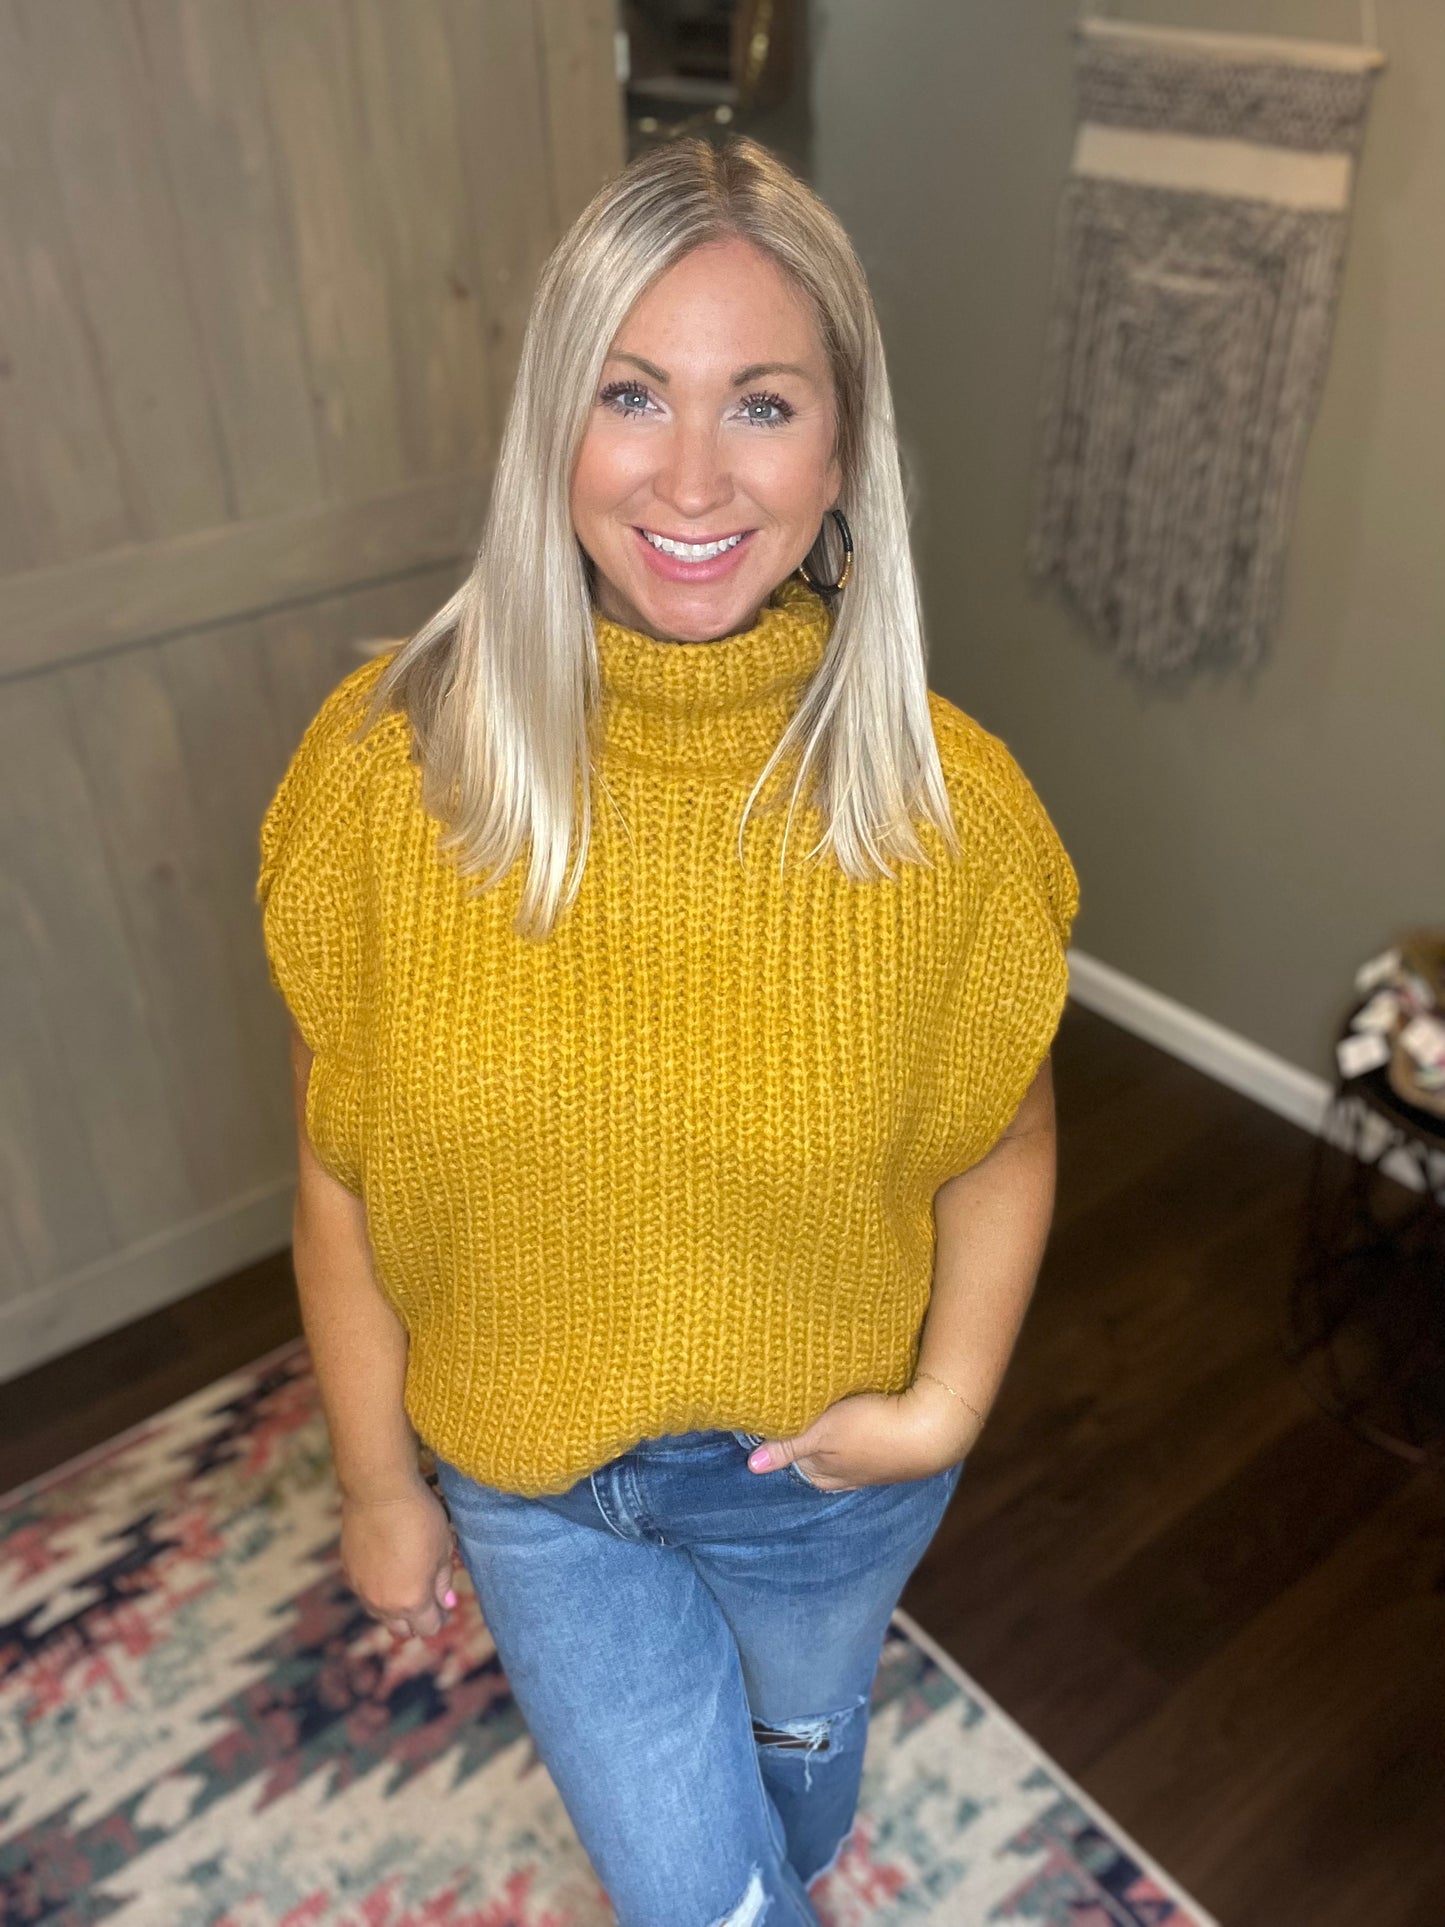 Mustard Turtleneck Sweater